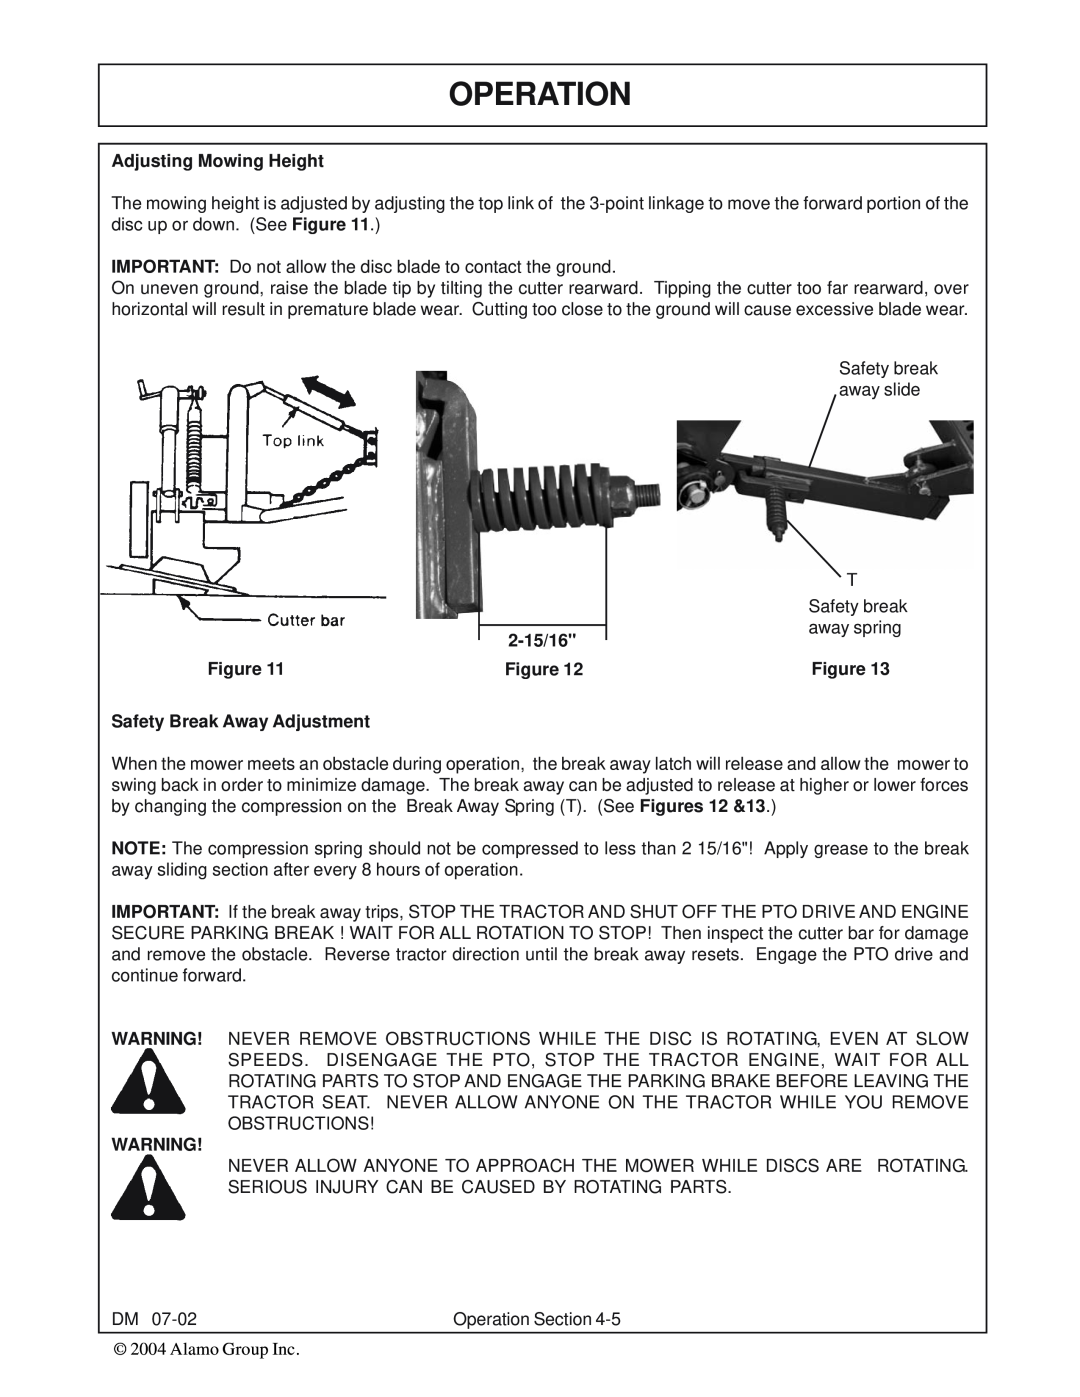 Servis-Rhino DM124, DM82, DM95, DM112 manual Operation, Adjusting Mowing Height, Figure, 2-15/16, Safety Break Away Adjustment 